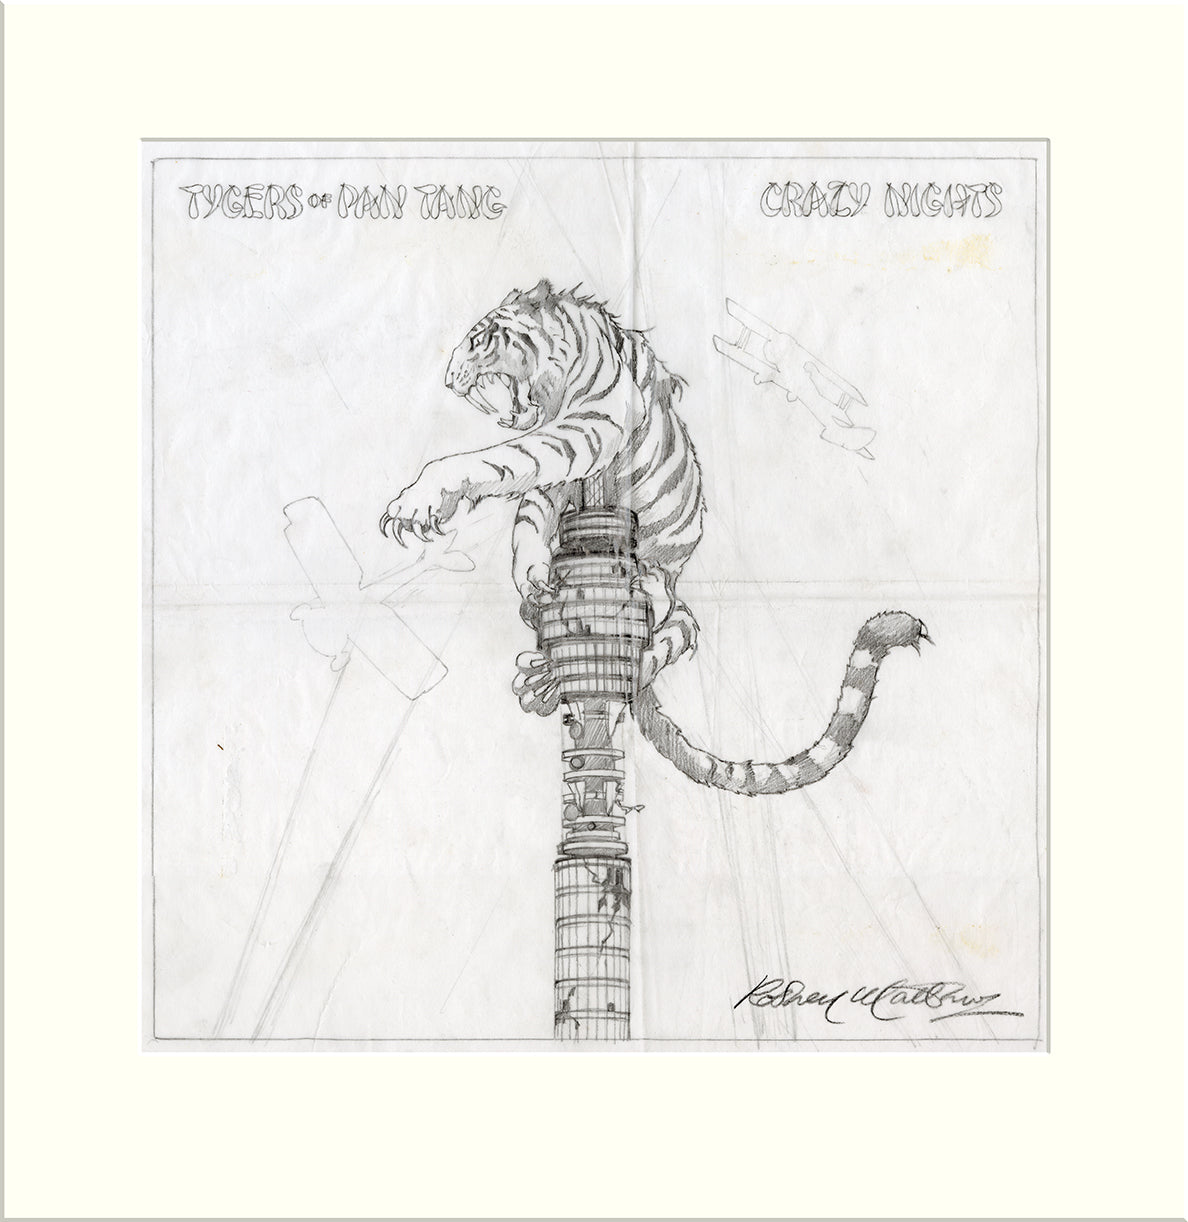 Crazy Nights (Tygers of Pan Tang) original preliminary sketch by Rodney Matthews